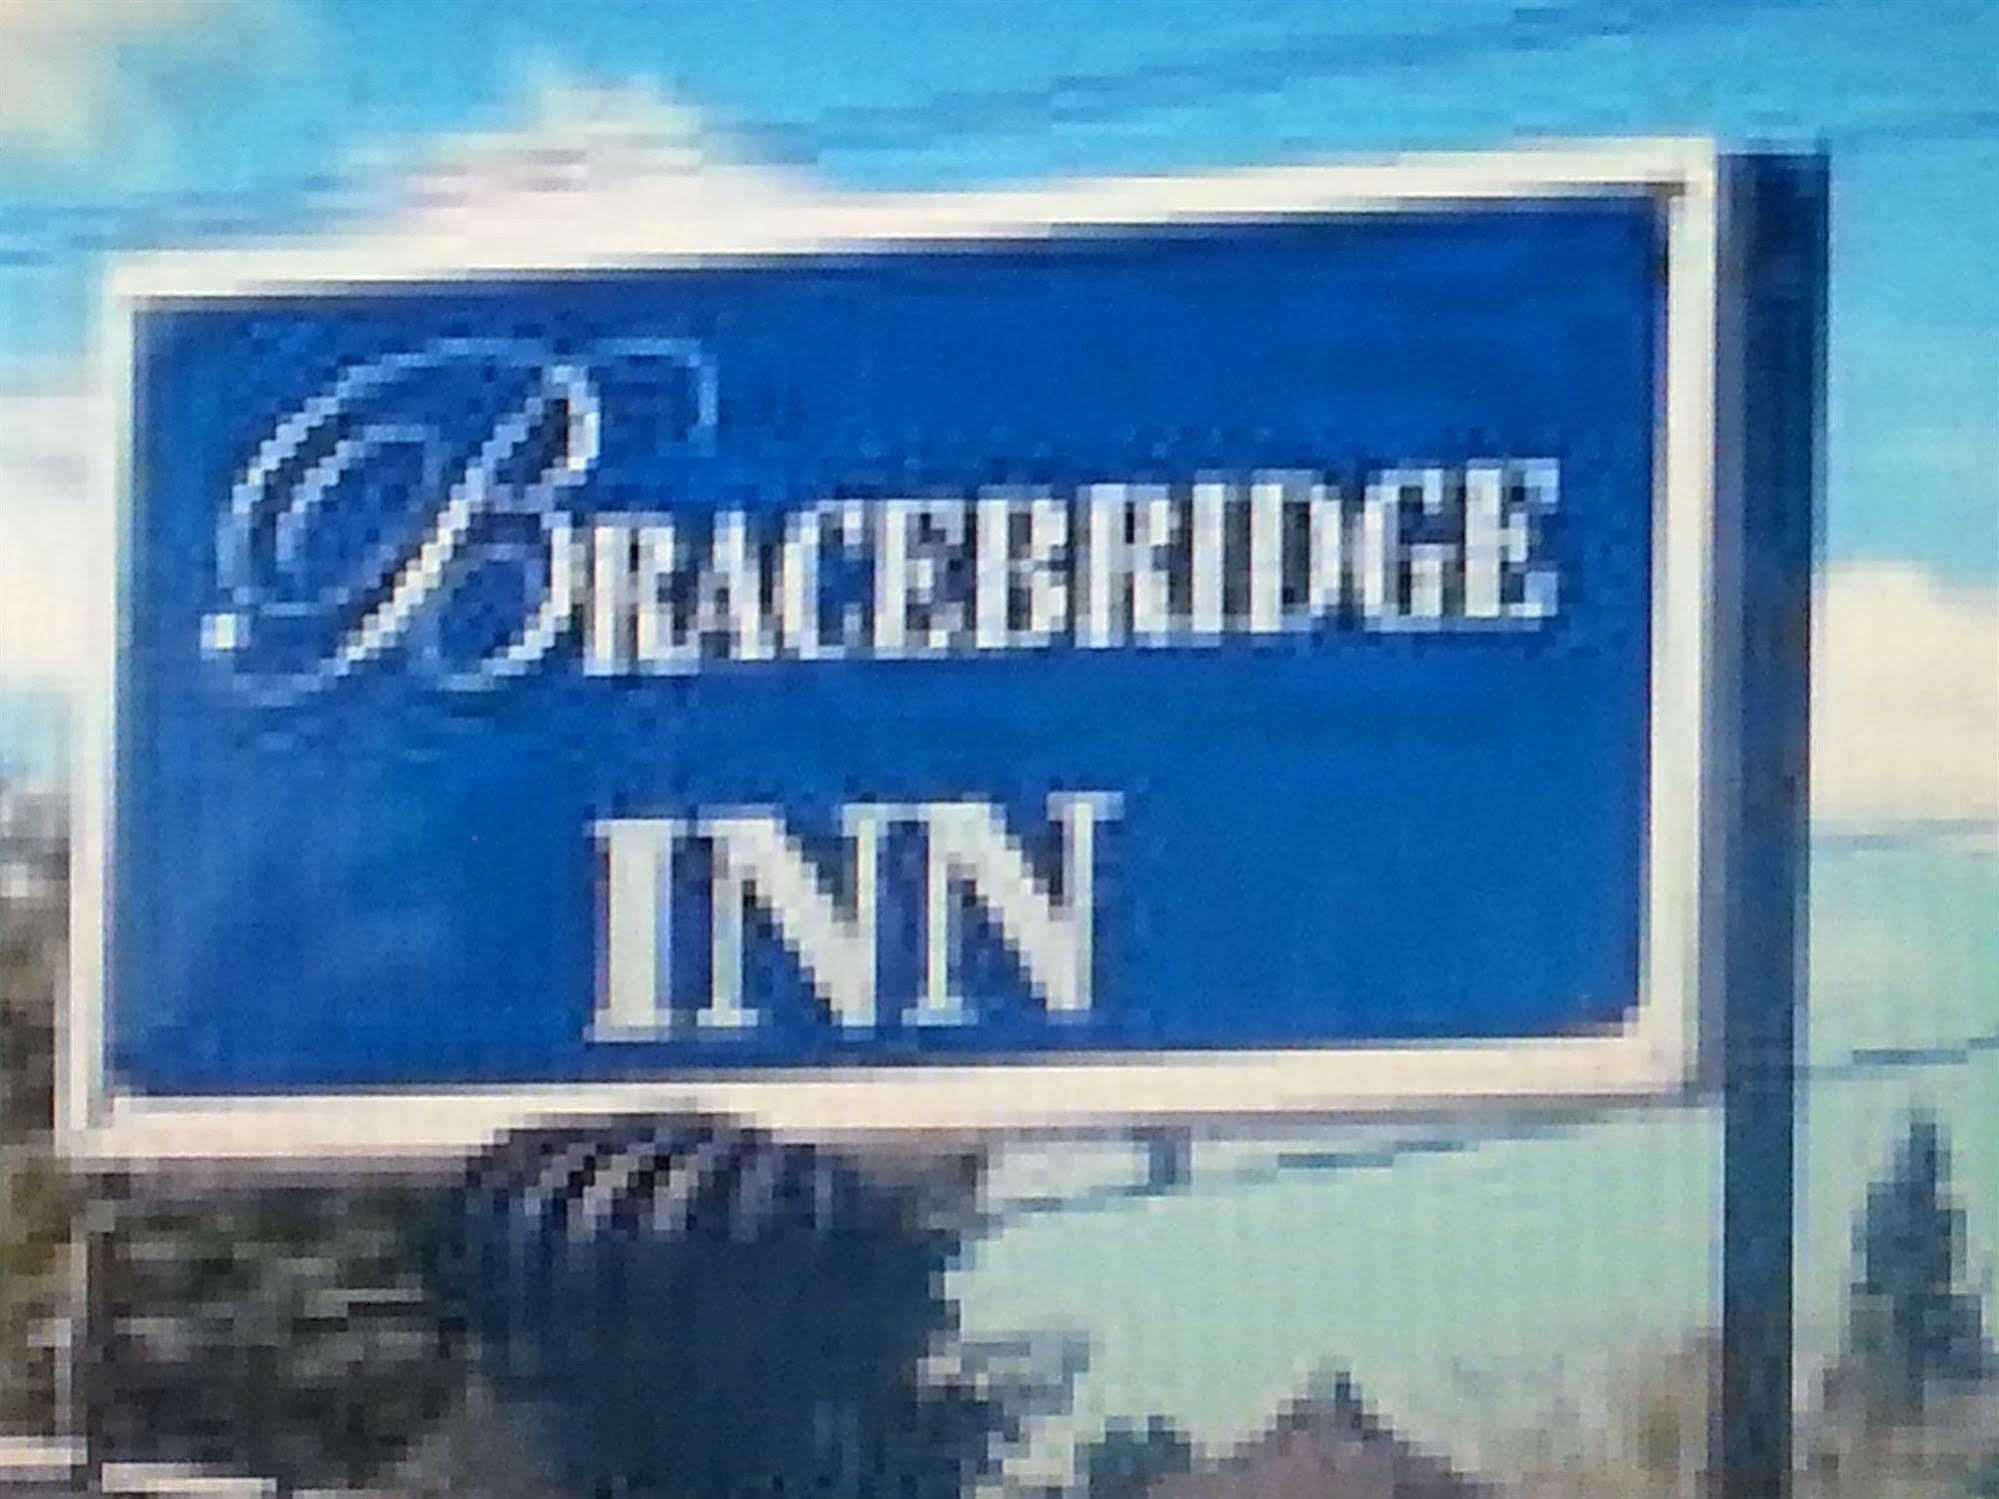 Bracebridge Inn Eksteriør billede